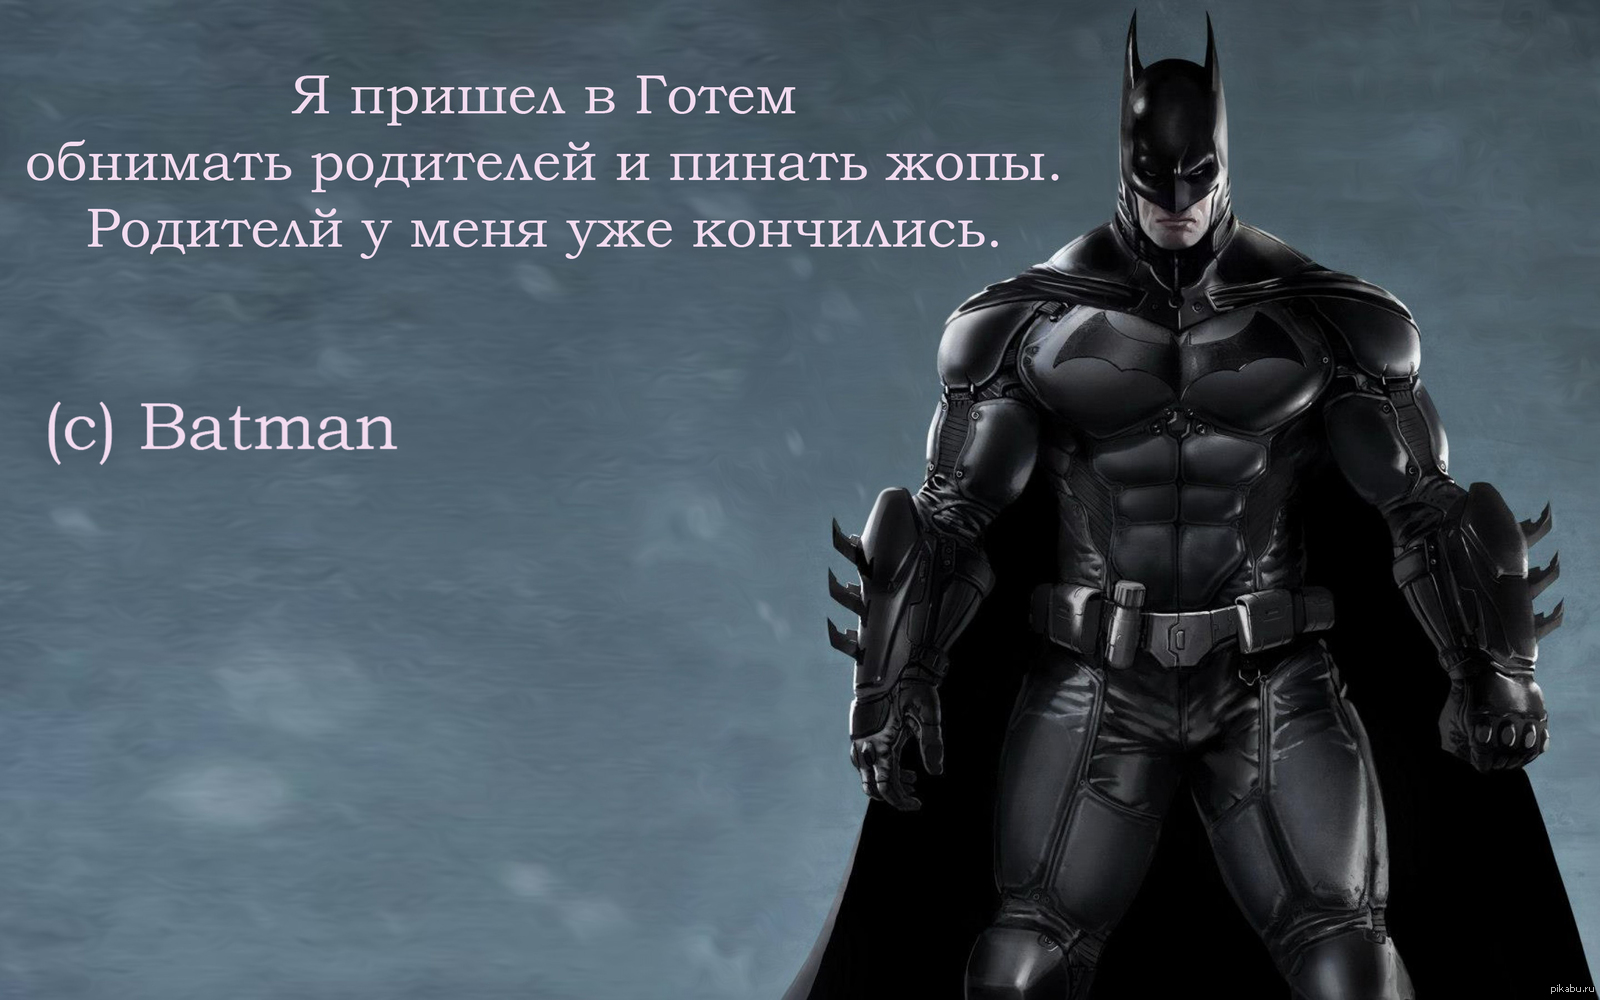 Batman. Бэтмен Аркхем ориджин рост Бэтмена. Бэткрыло в Batman Arkham Origins. Batman Arkham Origins гаджеты. Бэтмен Аркхем ориджин враги.